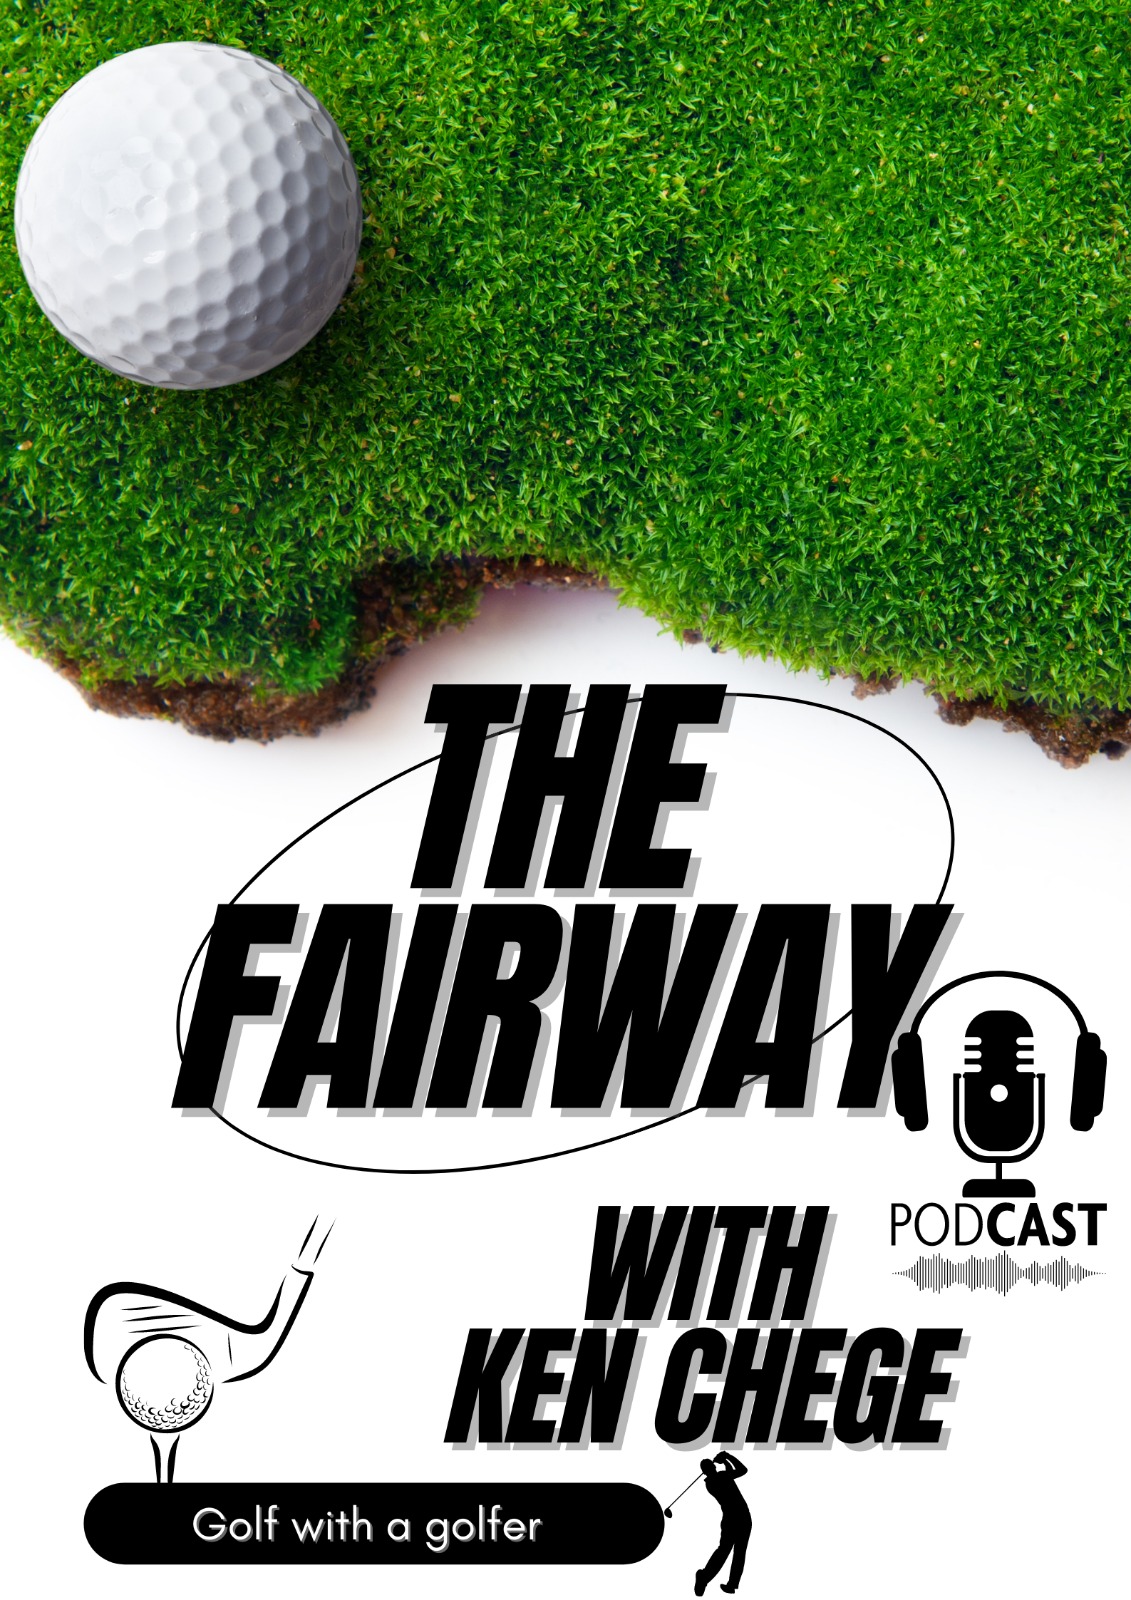 Fairway podcast: Episode 4